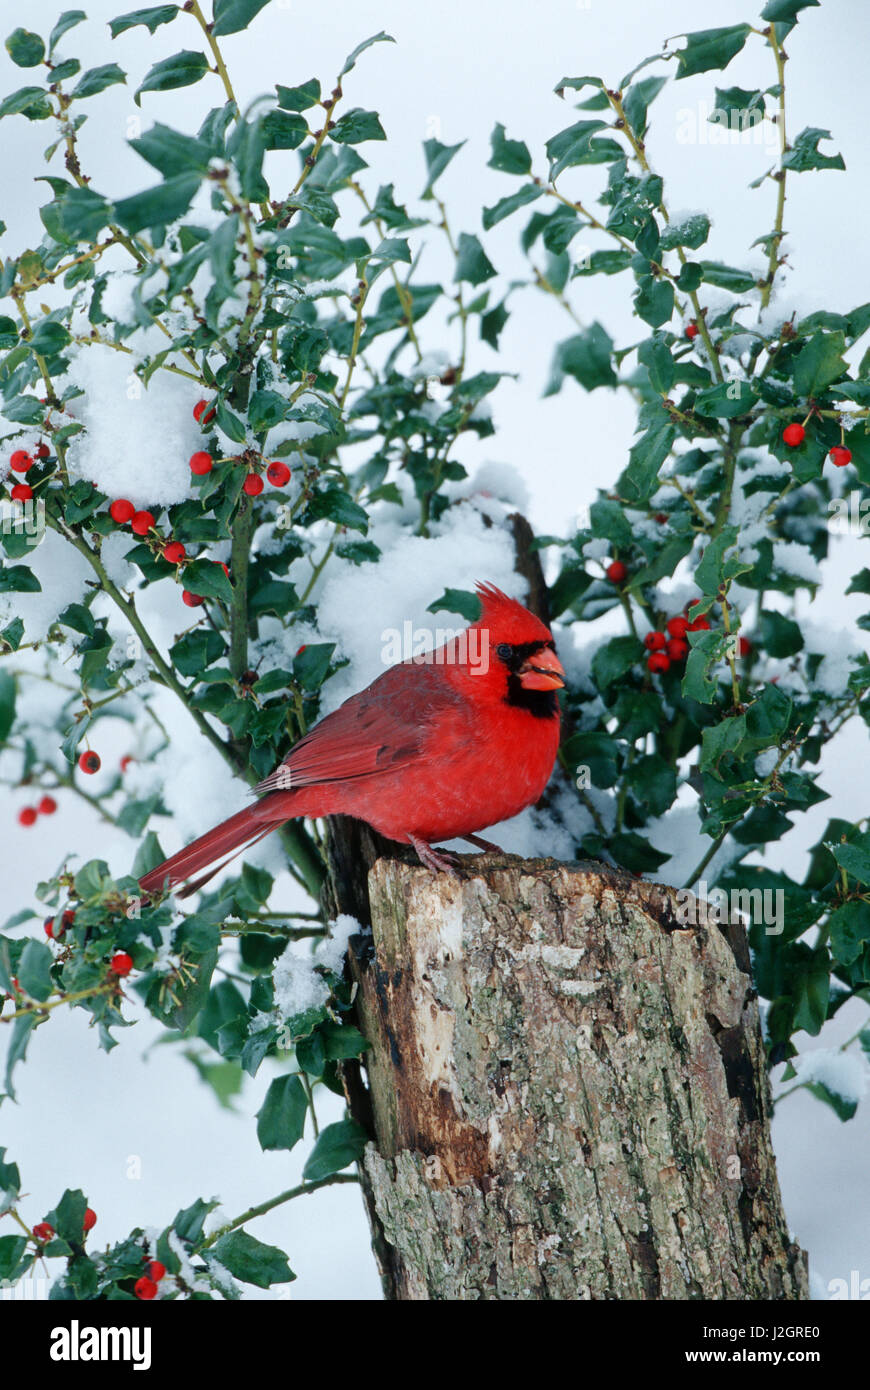 Northern Cardinal (Cardinalis cardinalis) male on stump near China Holly (Ilex cornuta) in winter, Marion, IL Stock Photo